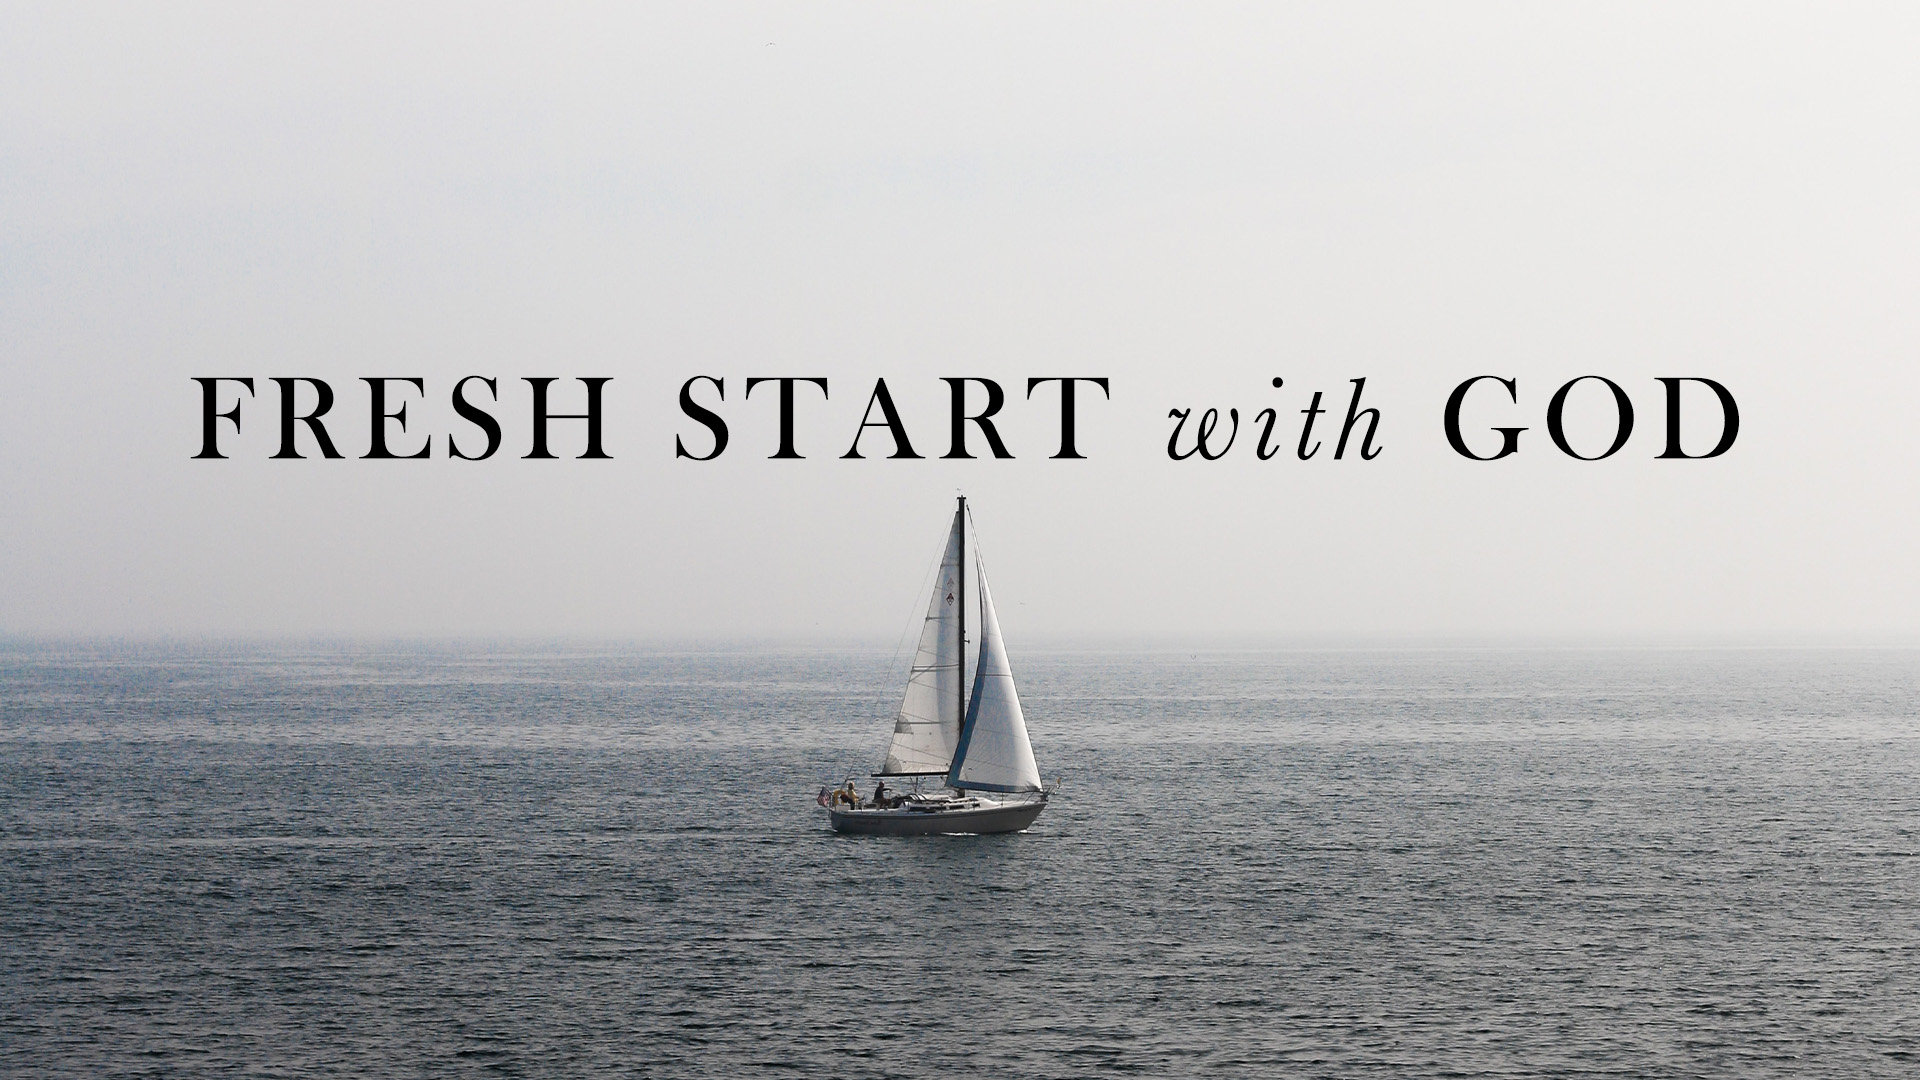 Fresh Start with God

Sunday | 9:00am
August 20
